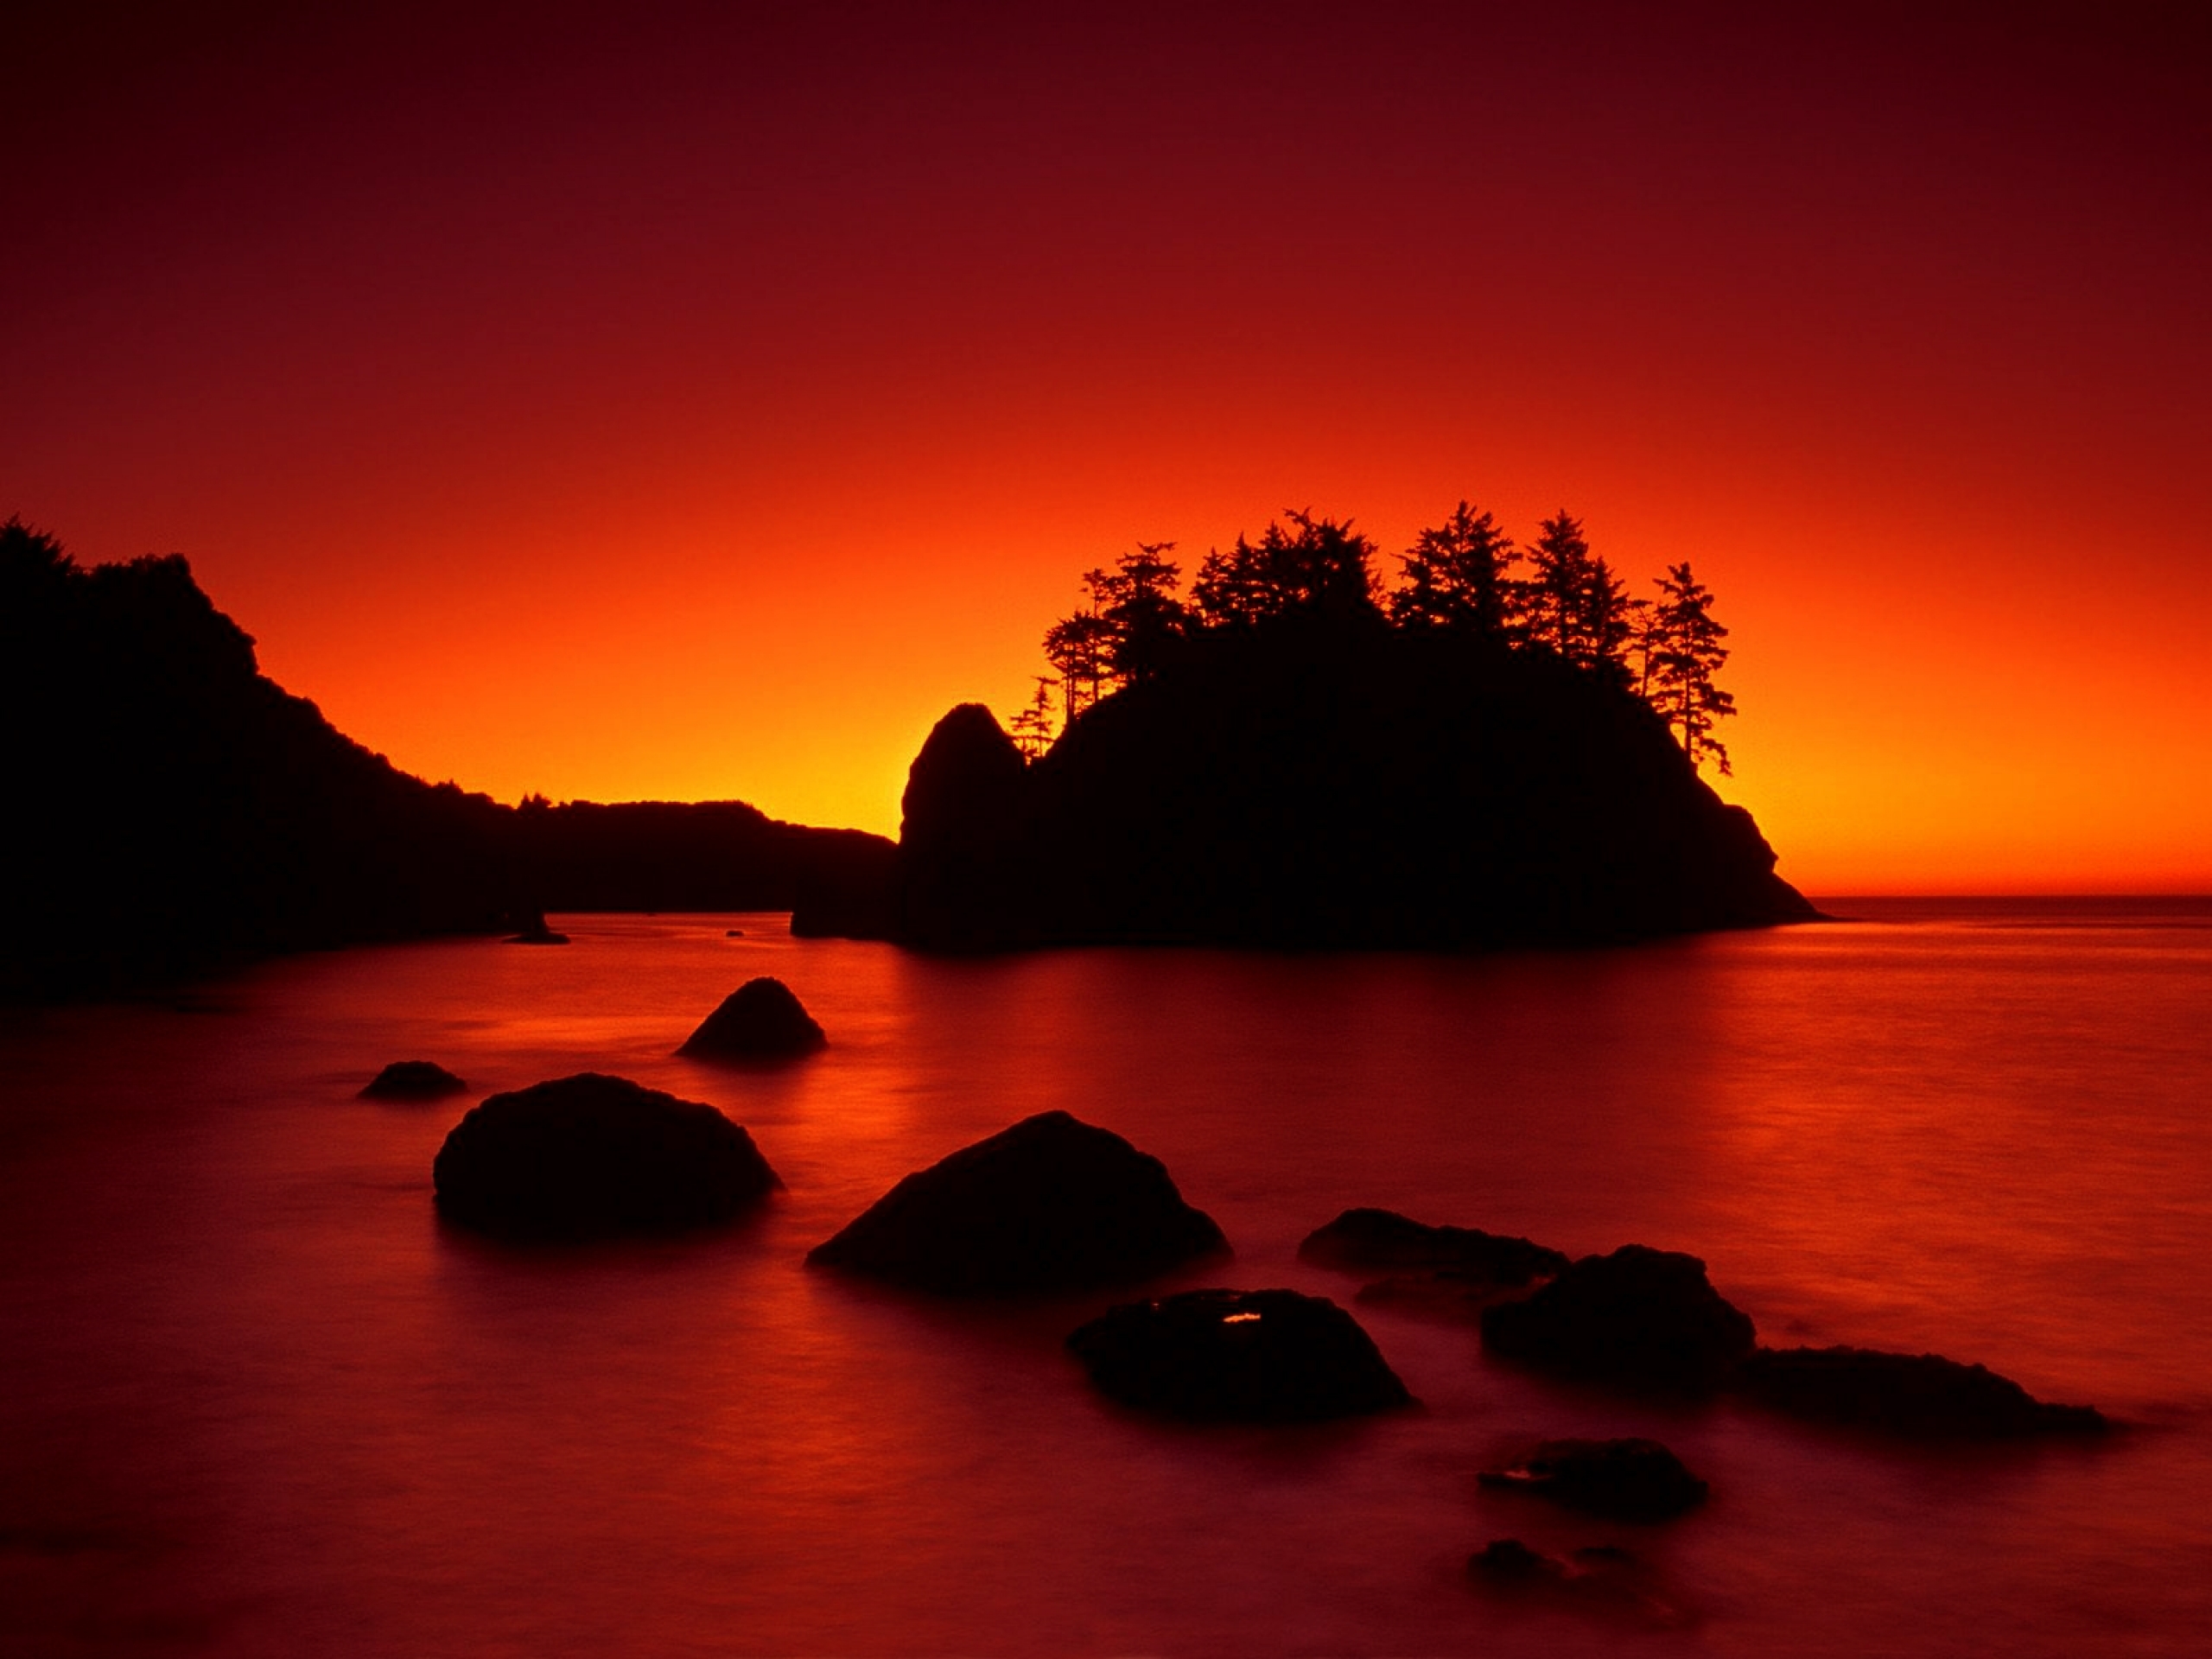 Red Sunset Ocean & Dark Island wallpaper. Red Sunset Ocean & Dark Island